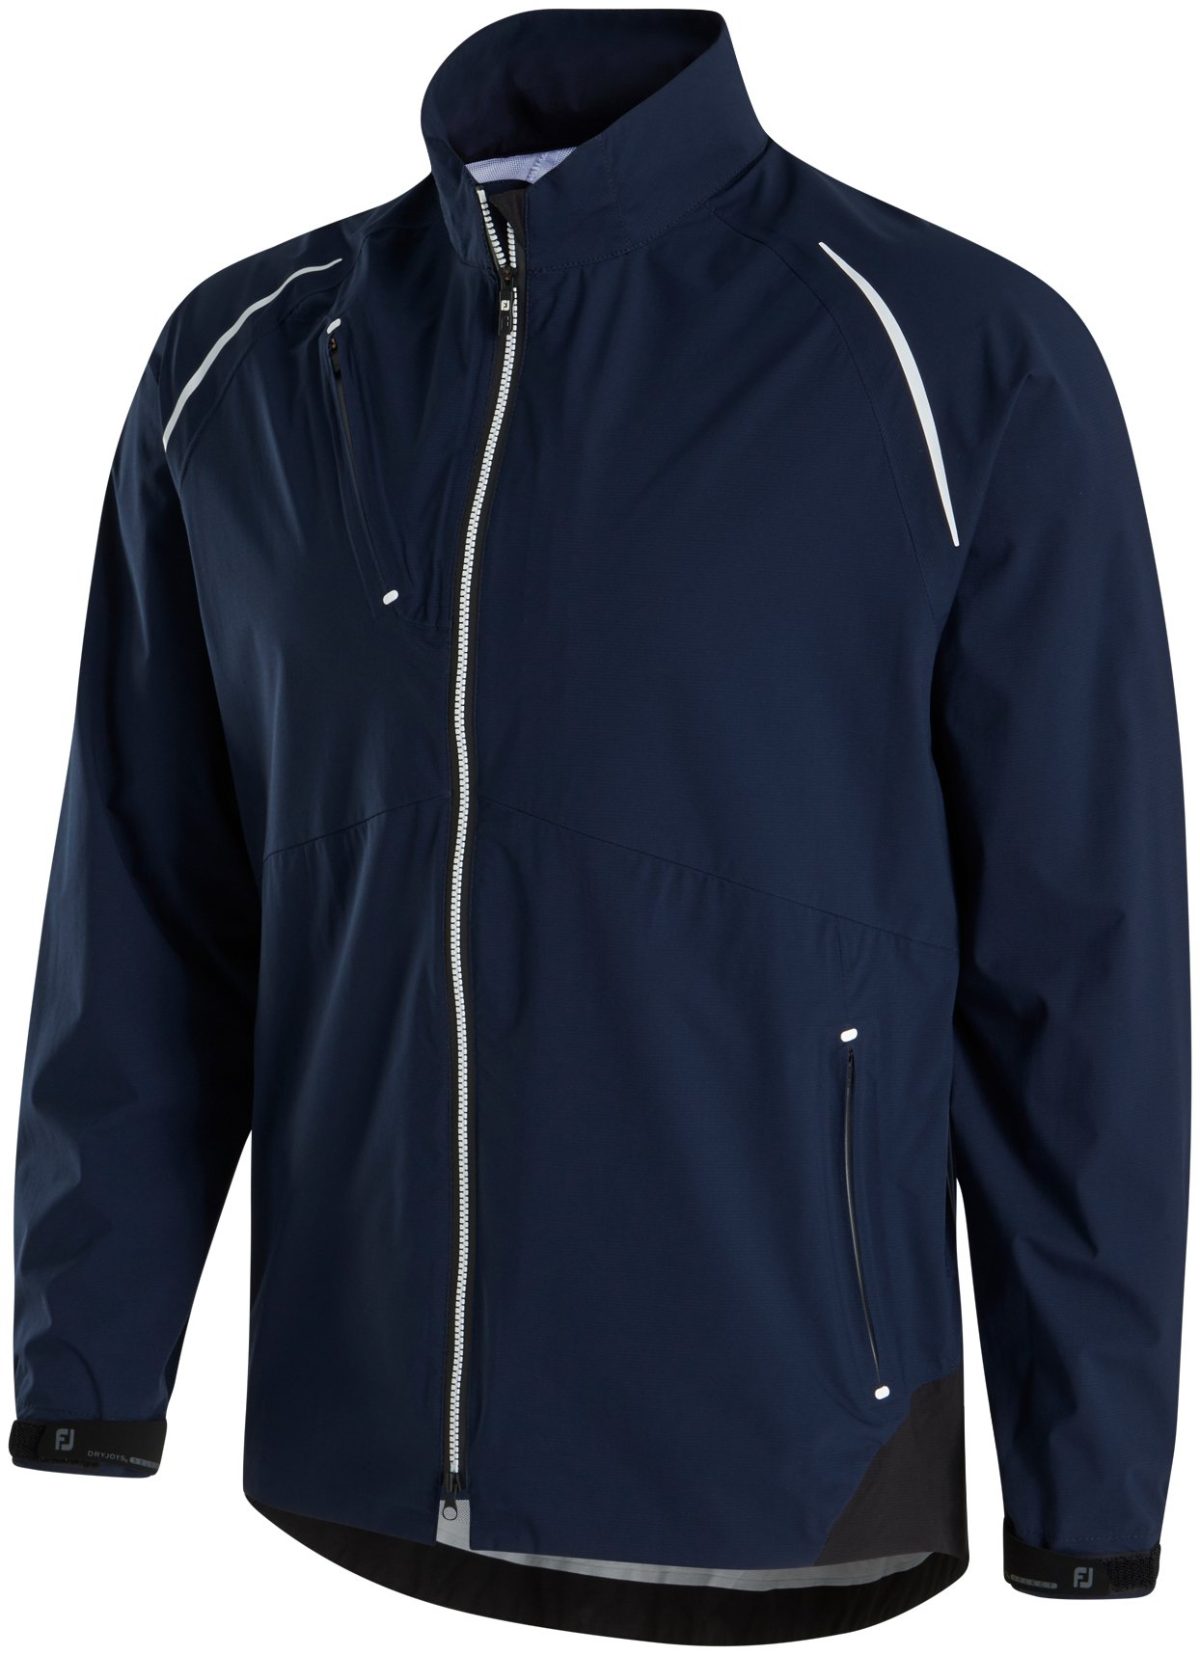 FootJoy Men's Dryjoys Select Golf Rain Jacket in Navy, Size S